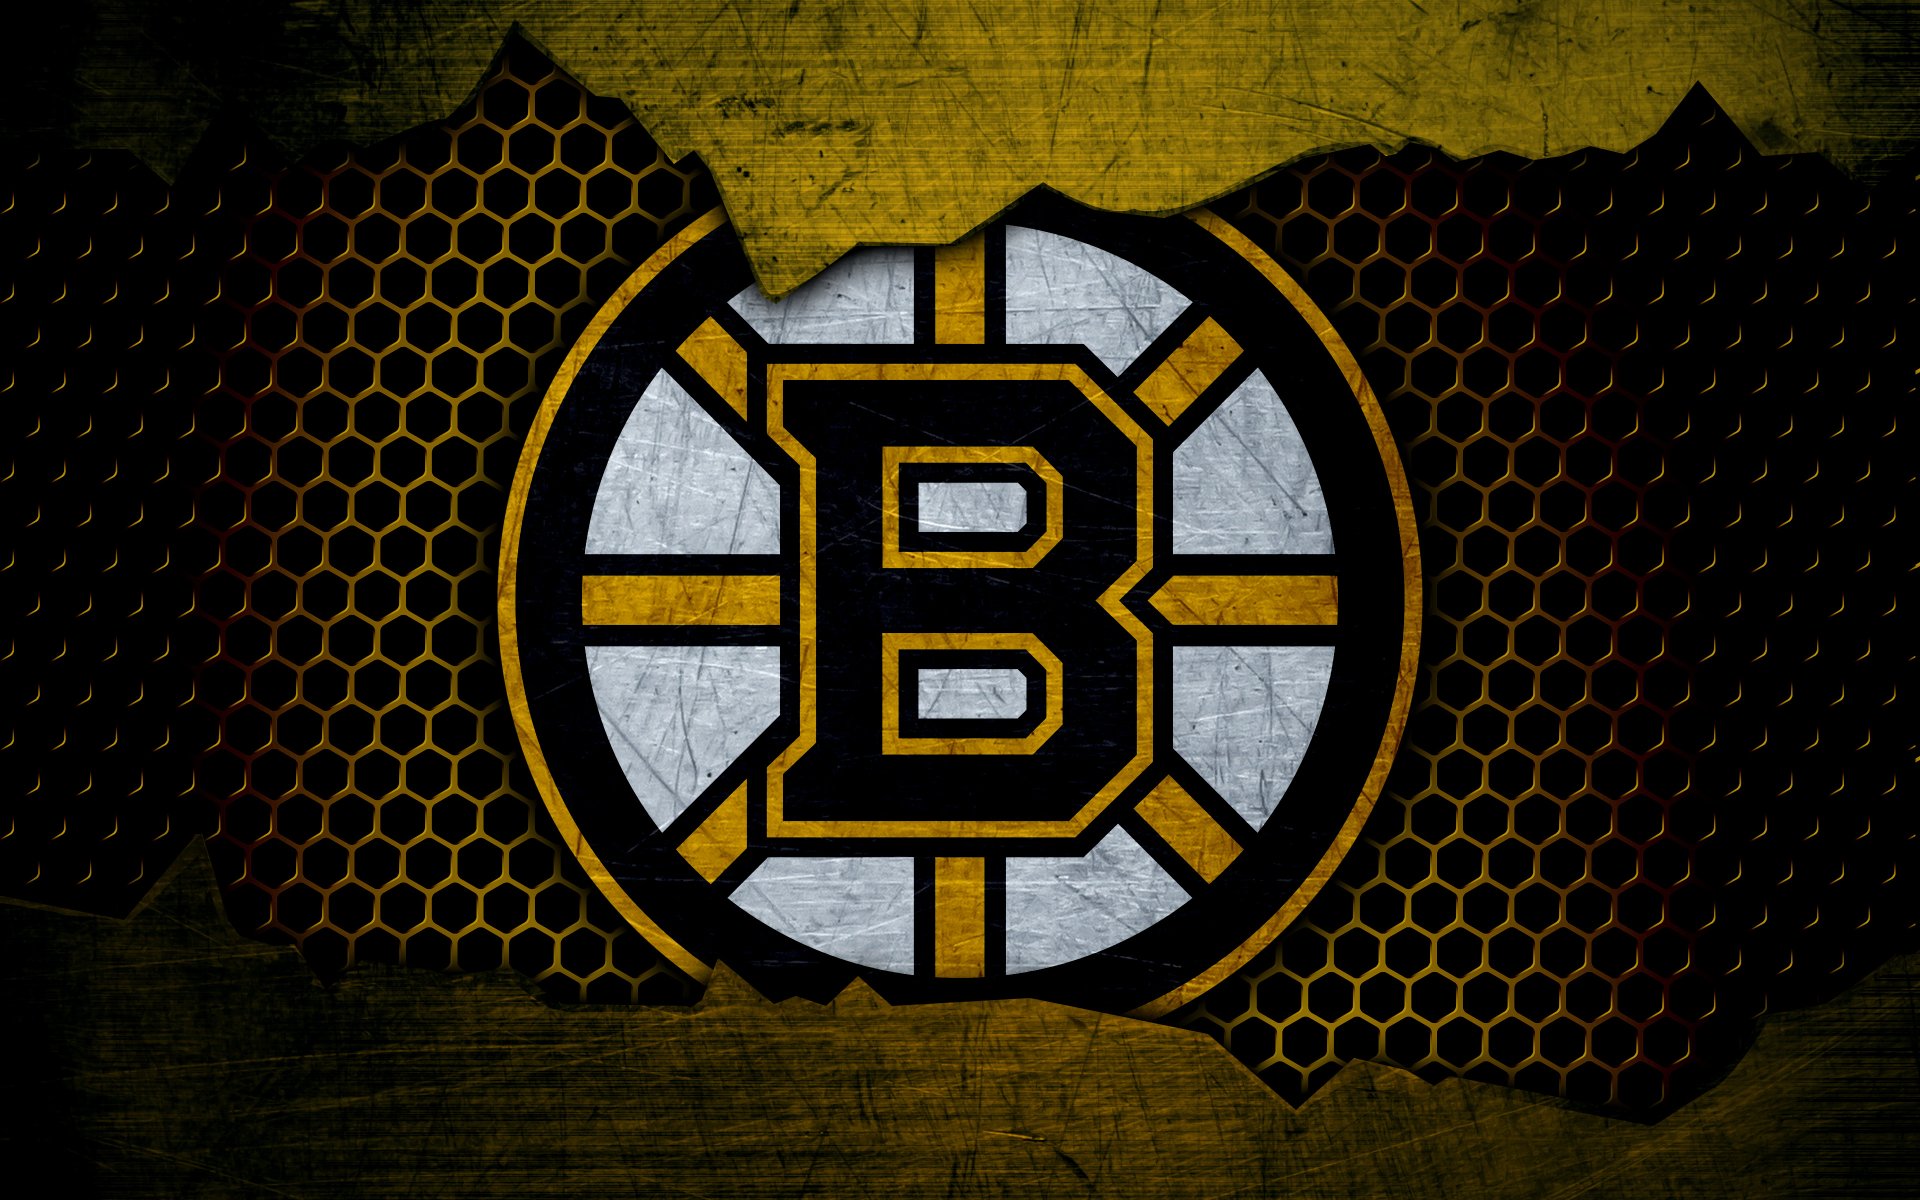 Sports Boston Bruins 4k Ultra Hd Wallpaper